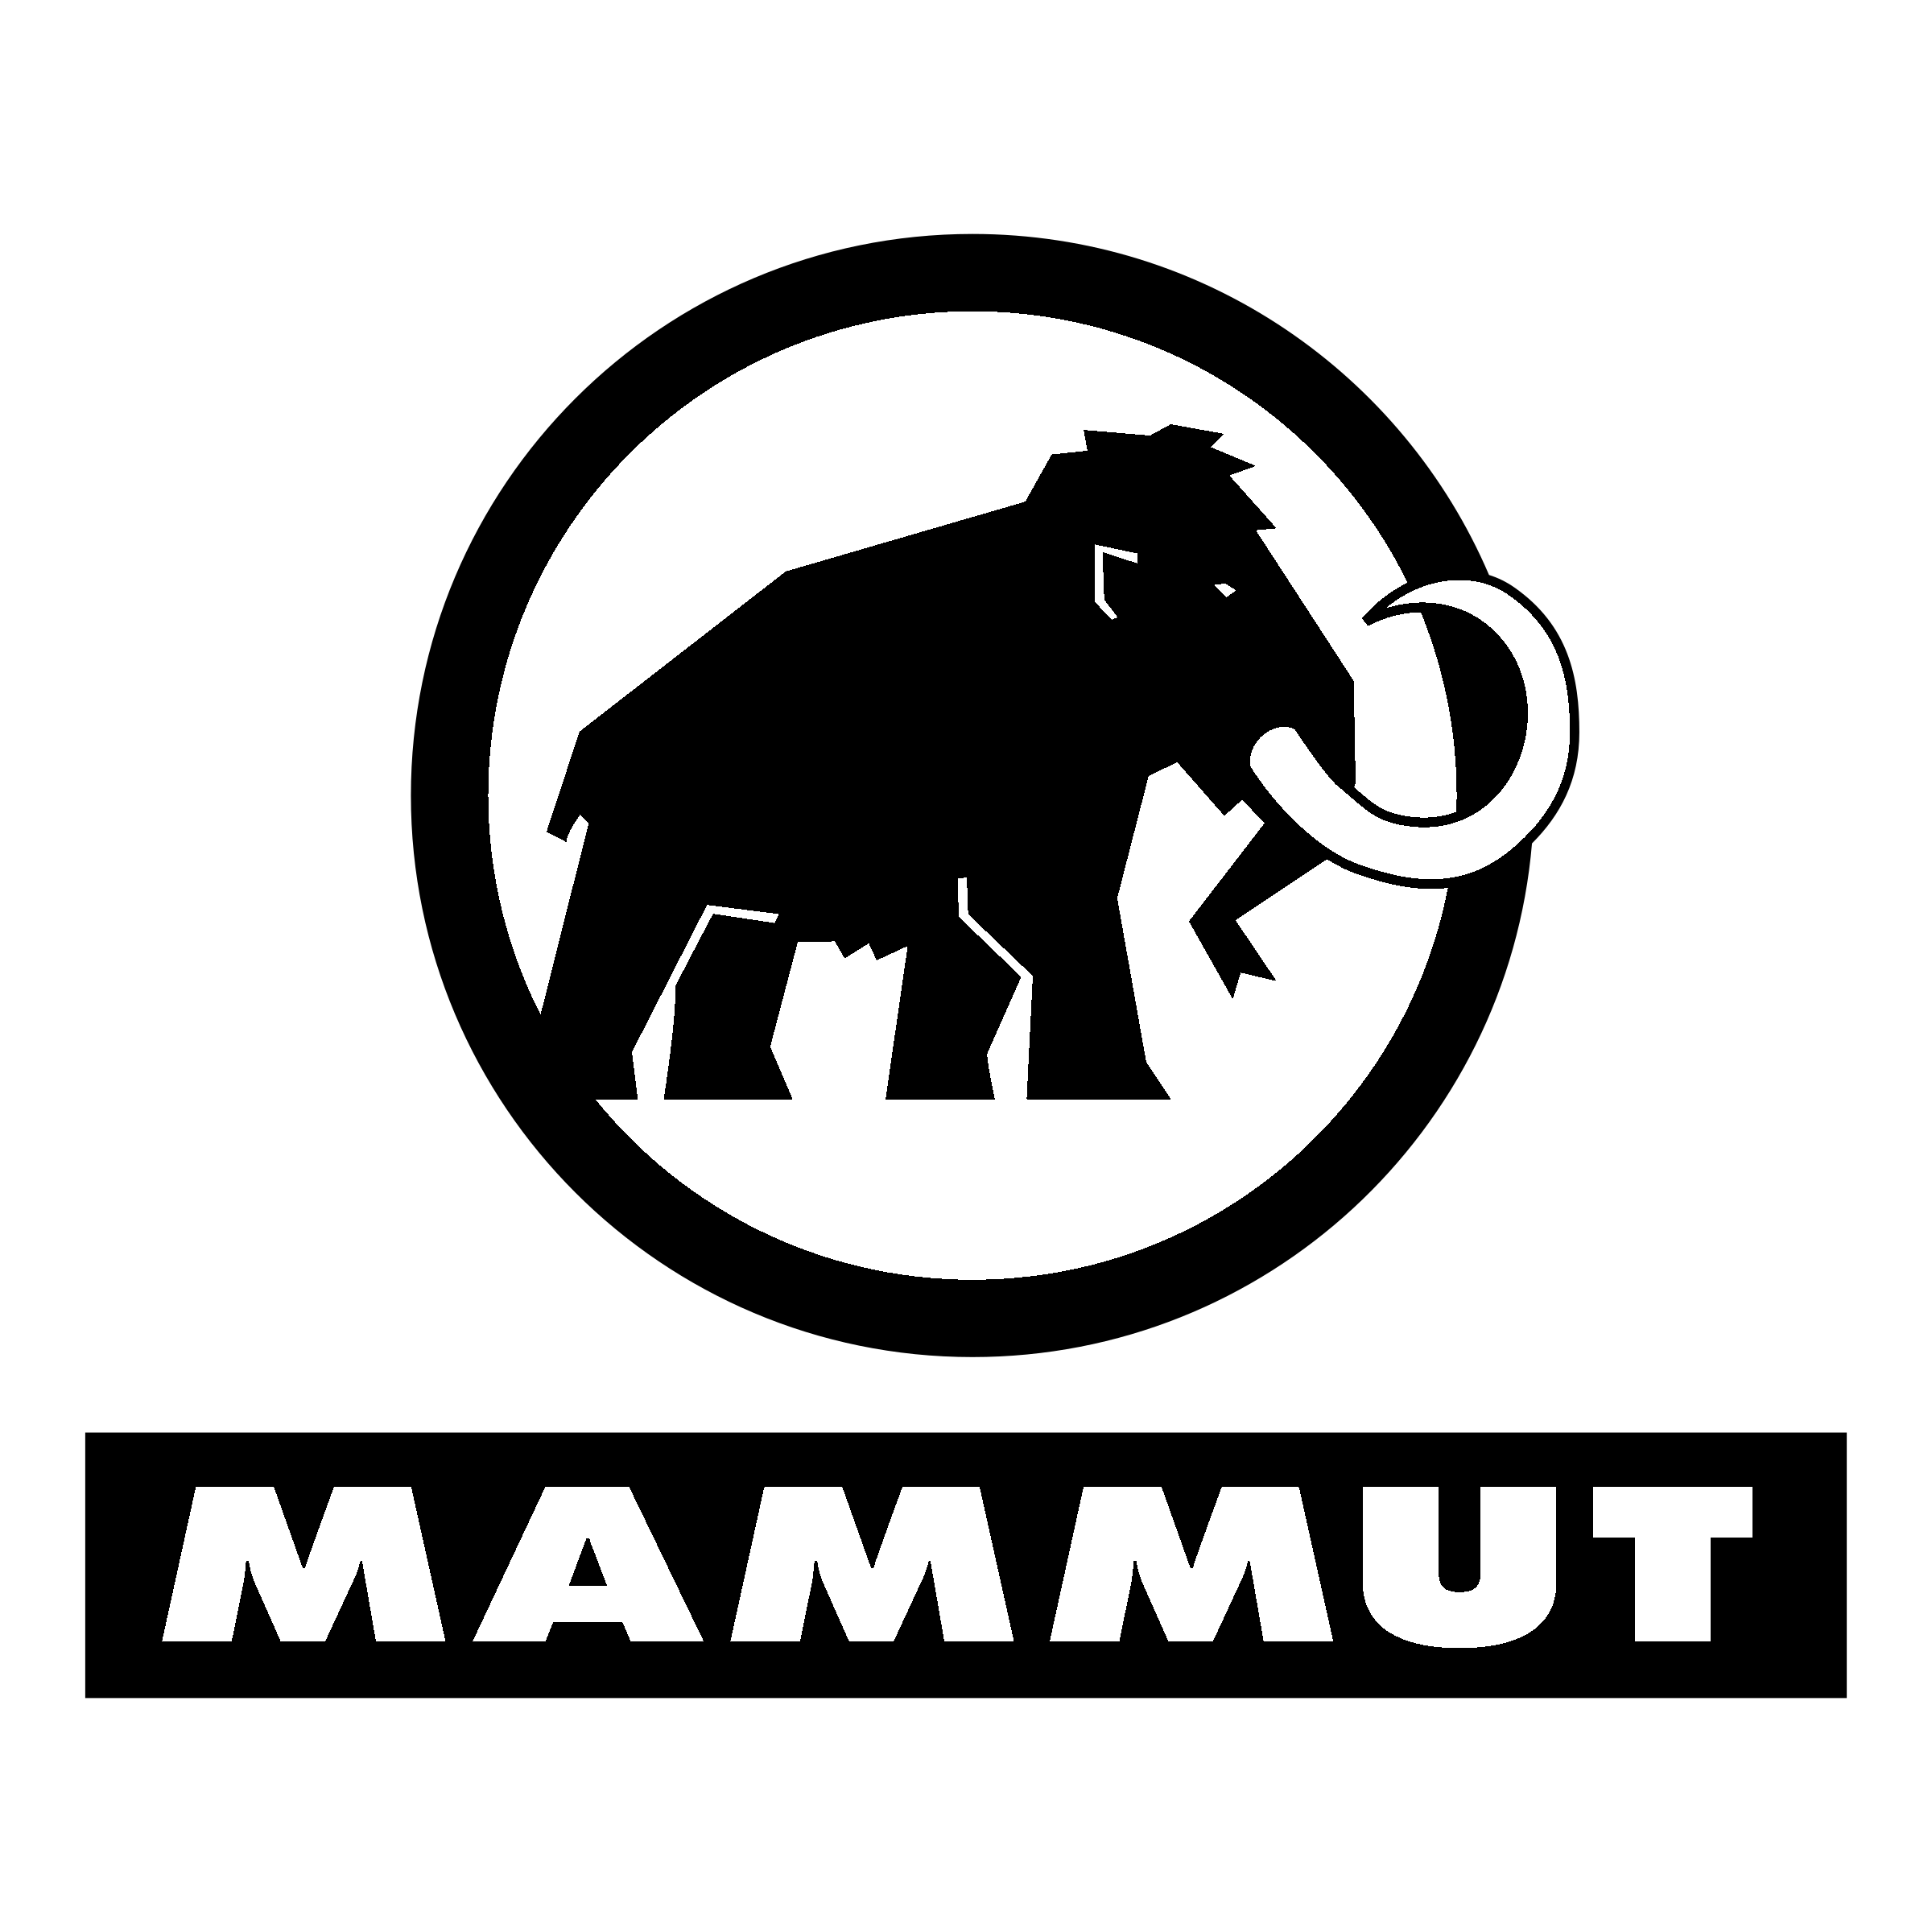 Mammut Outlet in Memmingen